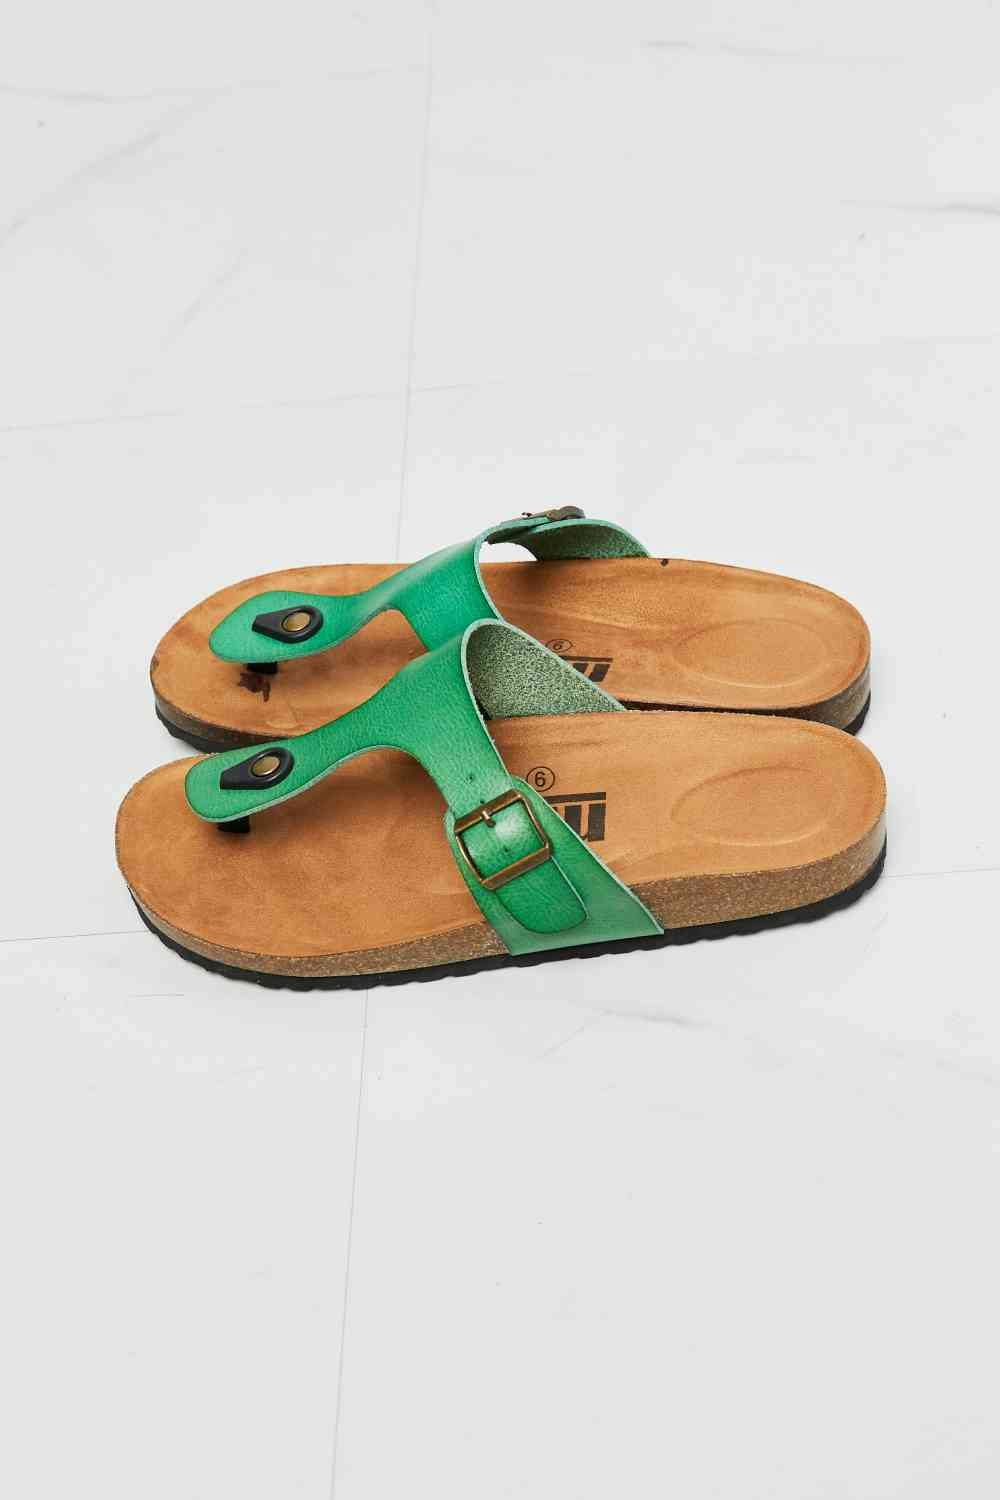 MMShoes Drift Away T-Strap Flip-Flop in Green | Sugarz Chique Boutique